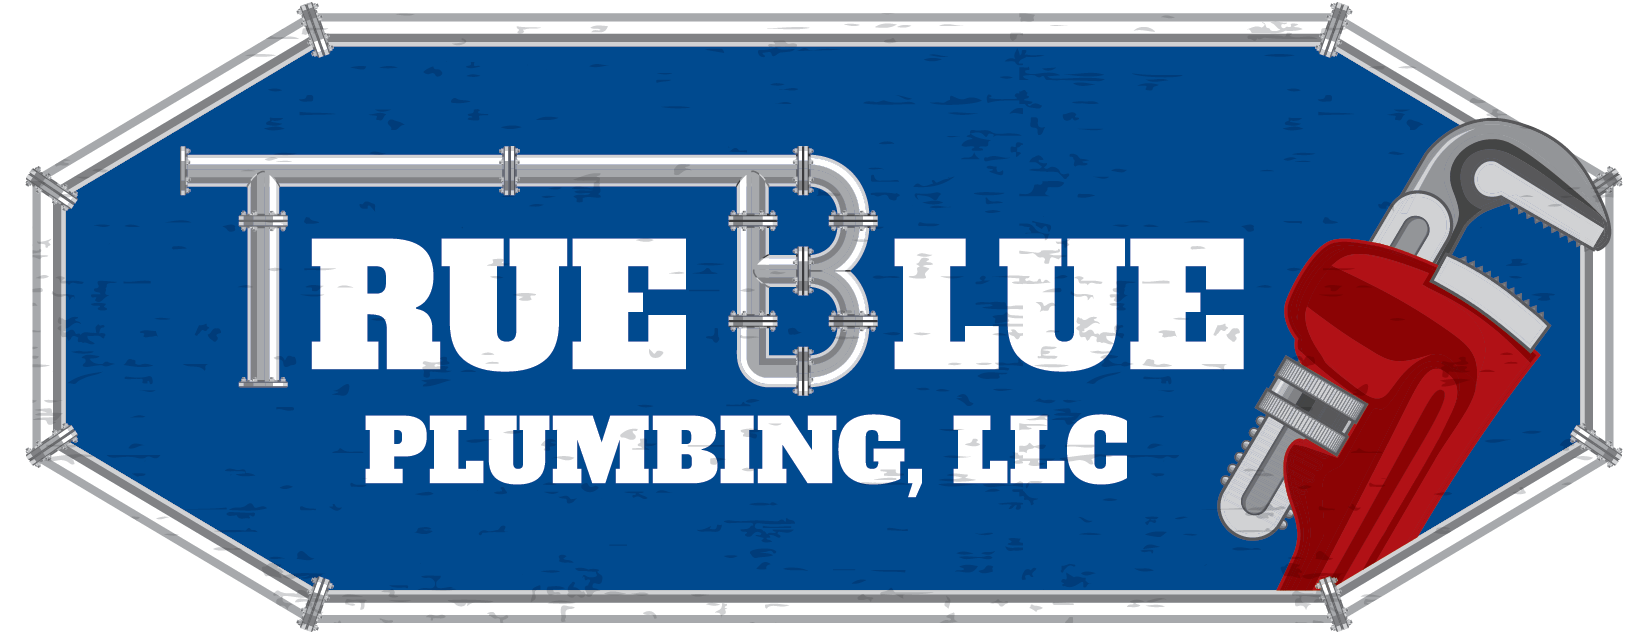 blue planet plumbing franchise